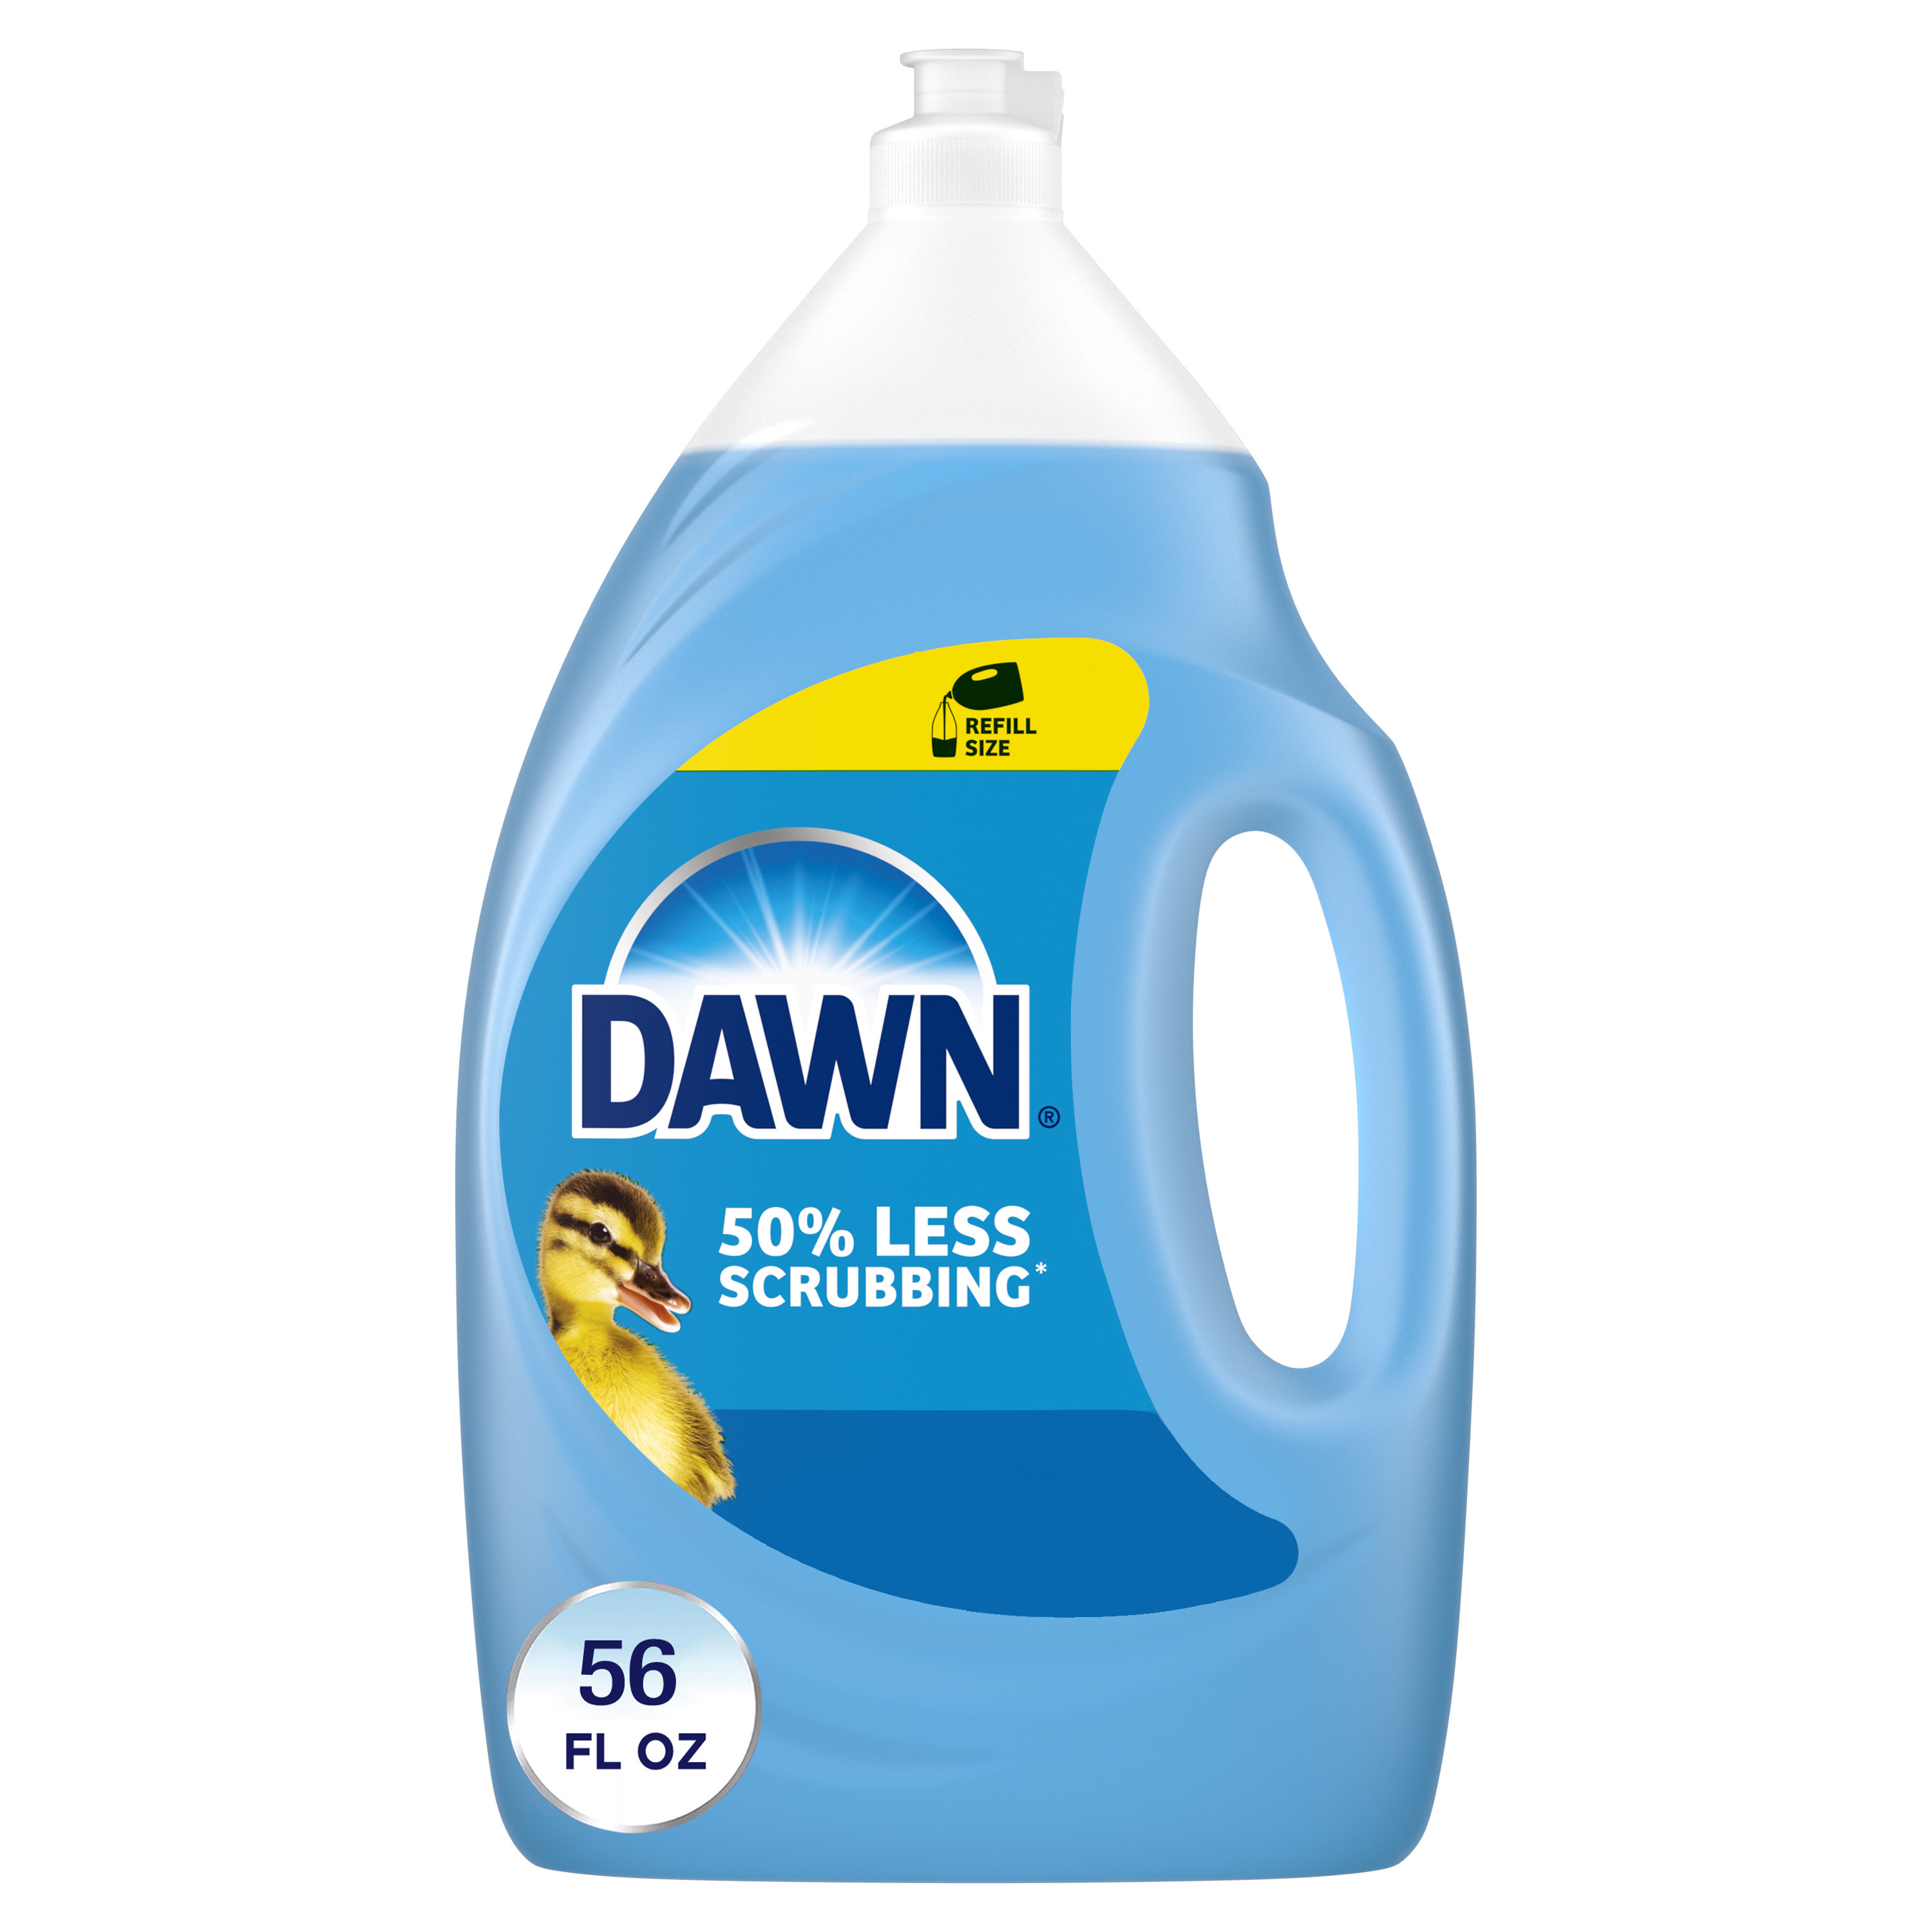 Dawn Ultra Dish Soap Dishwashing Liquid, Original Scent, 56 fl oz "More Options Available" - image 1 of 10